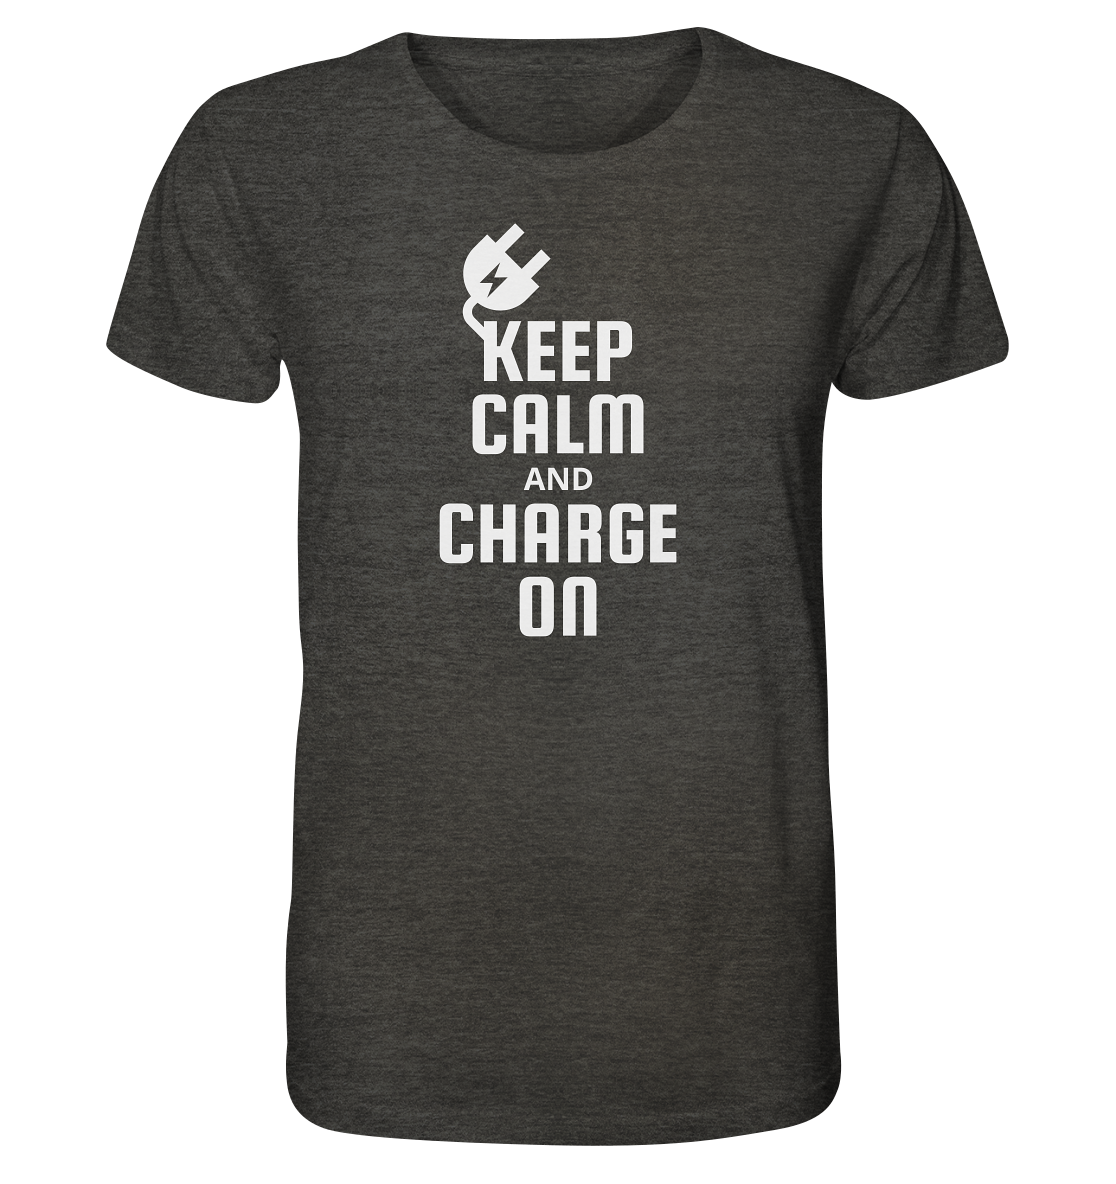 Charge on ORGANIC - Organic Shirt (meliert)